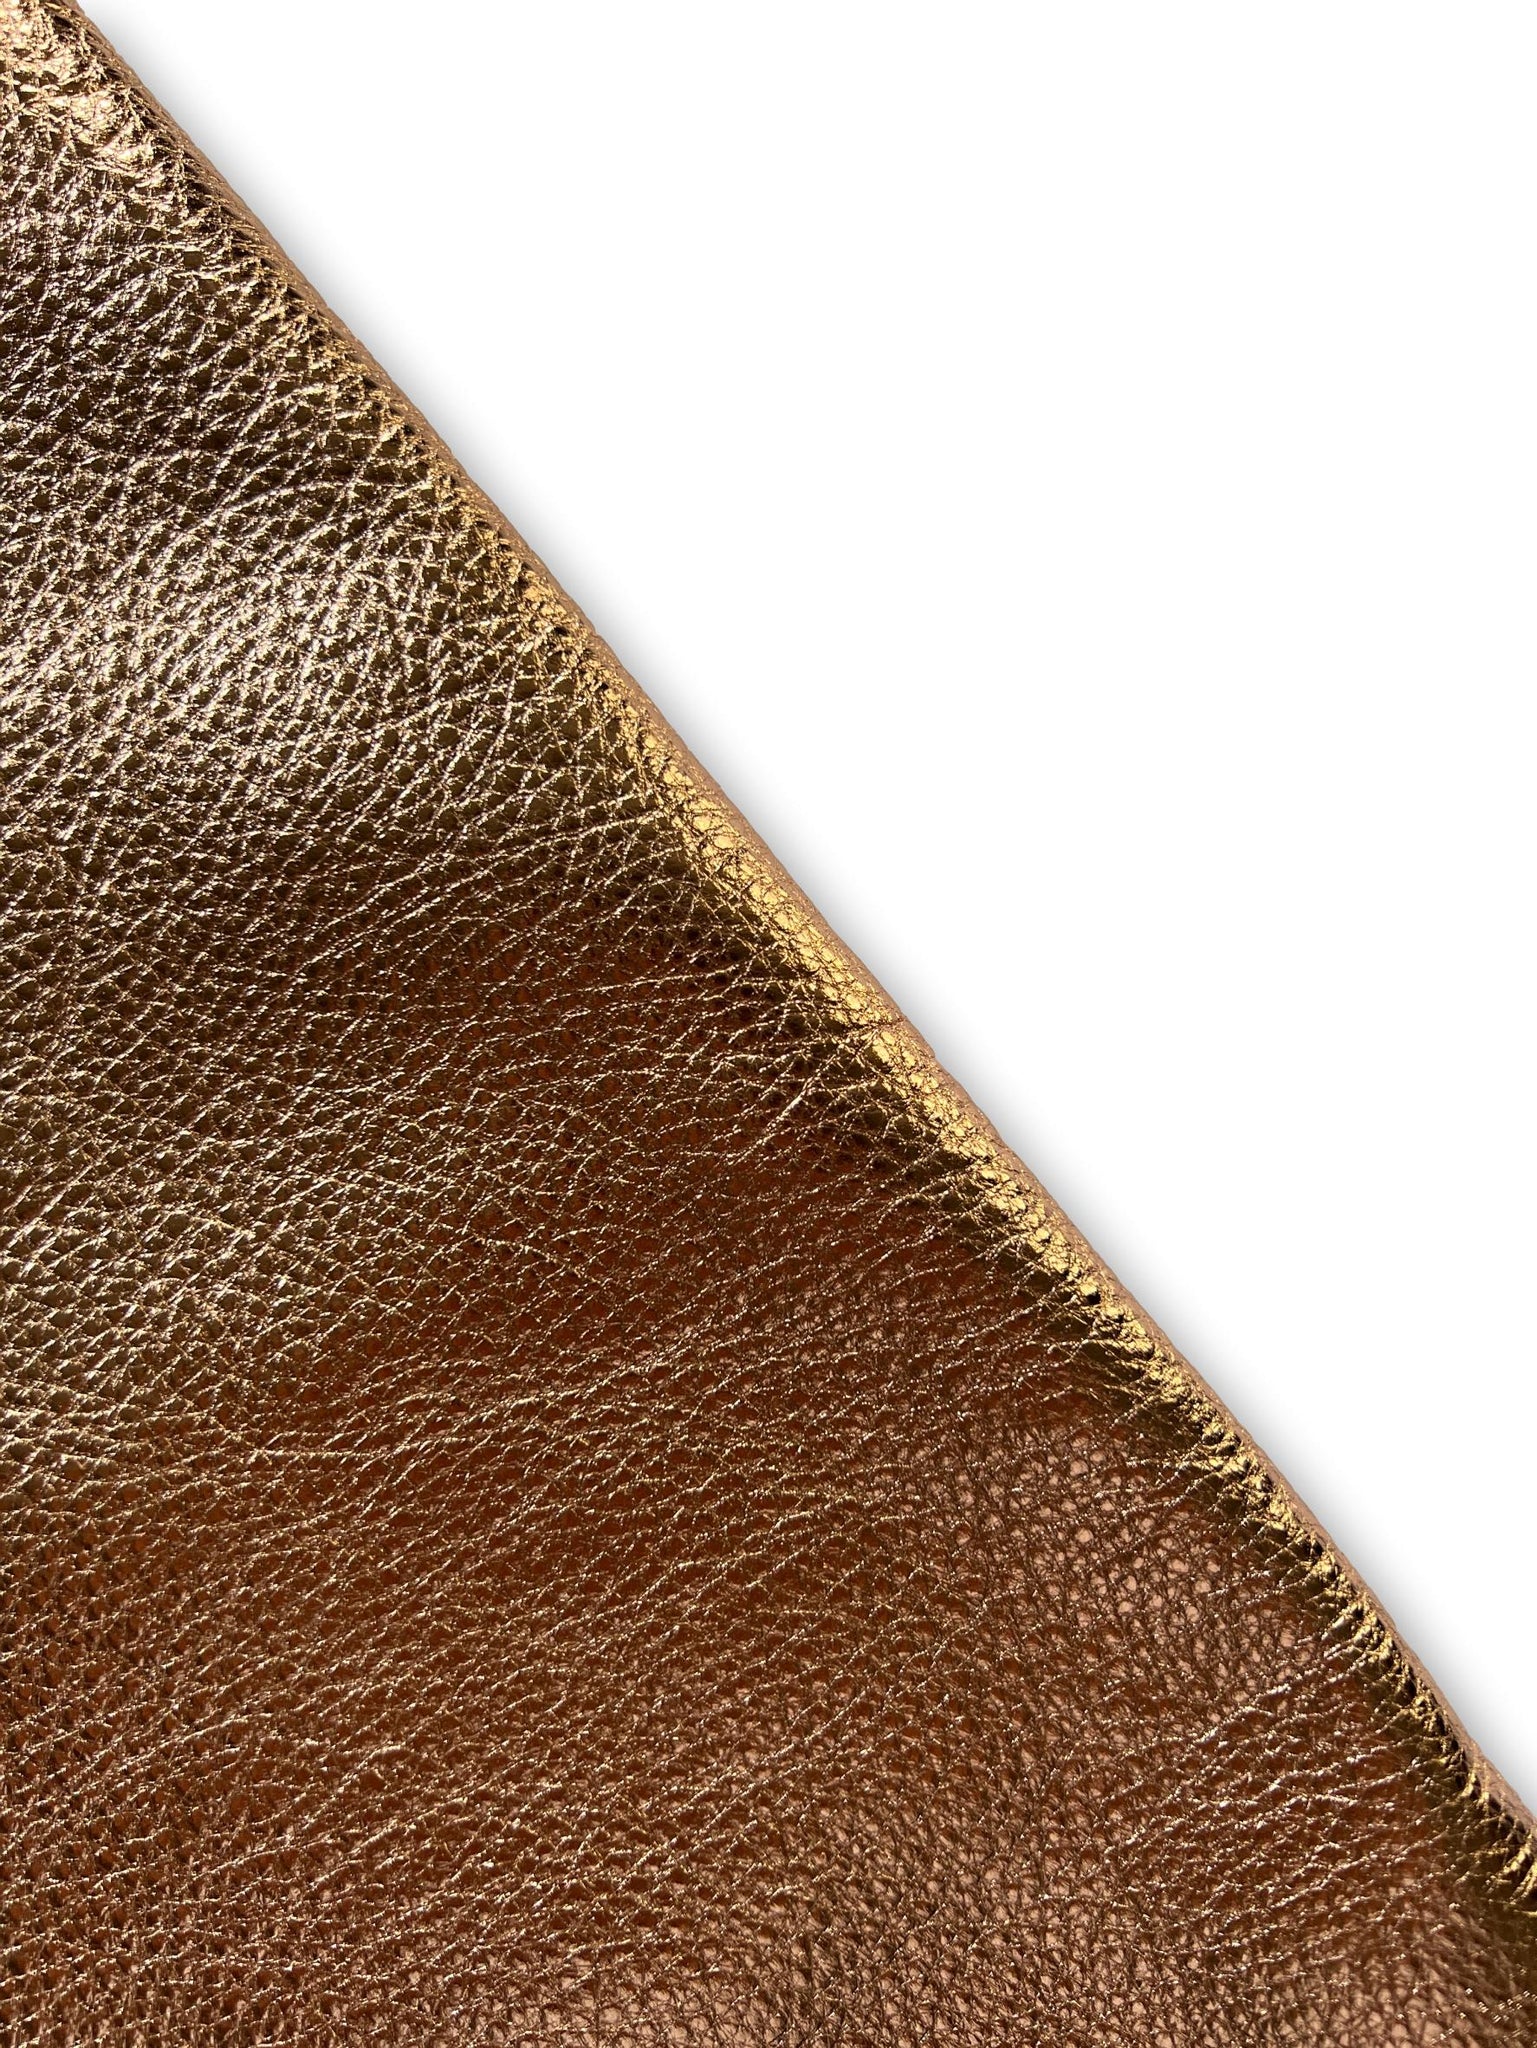 Rose Gold Metallic Cowhide Leather Skins